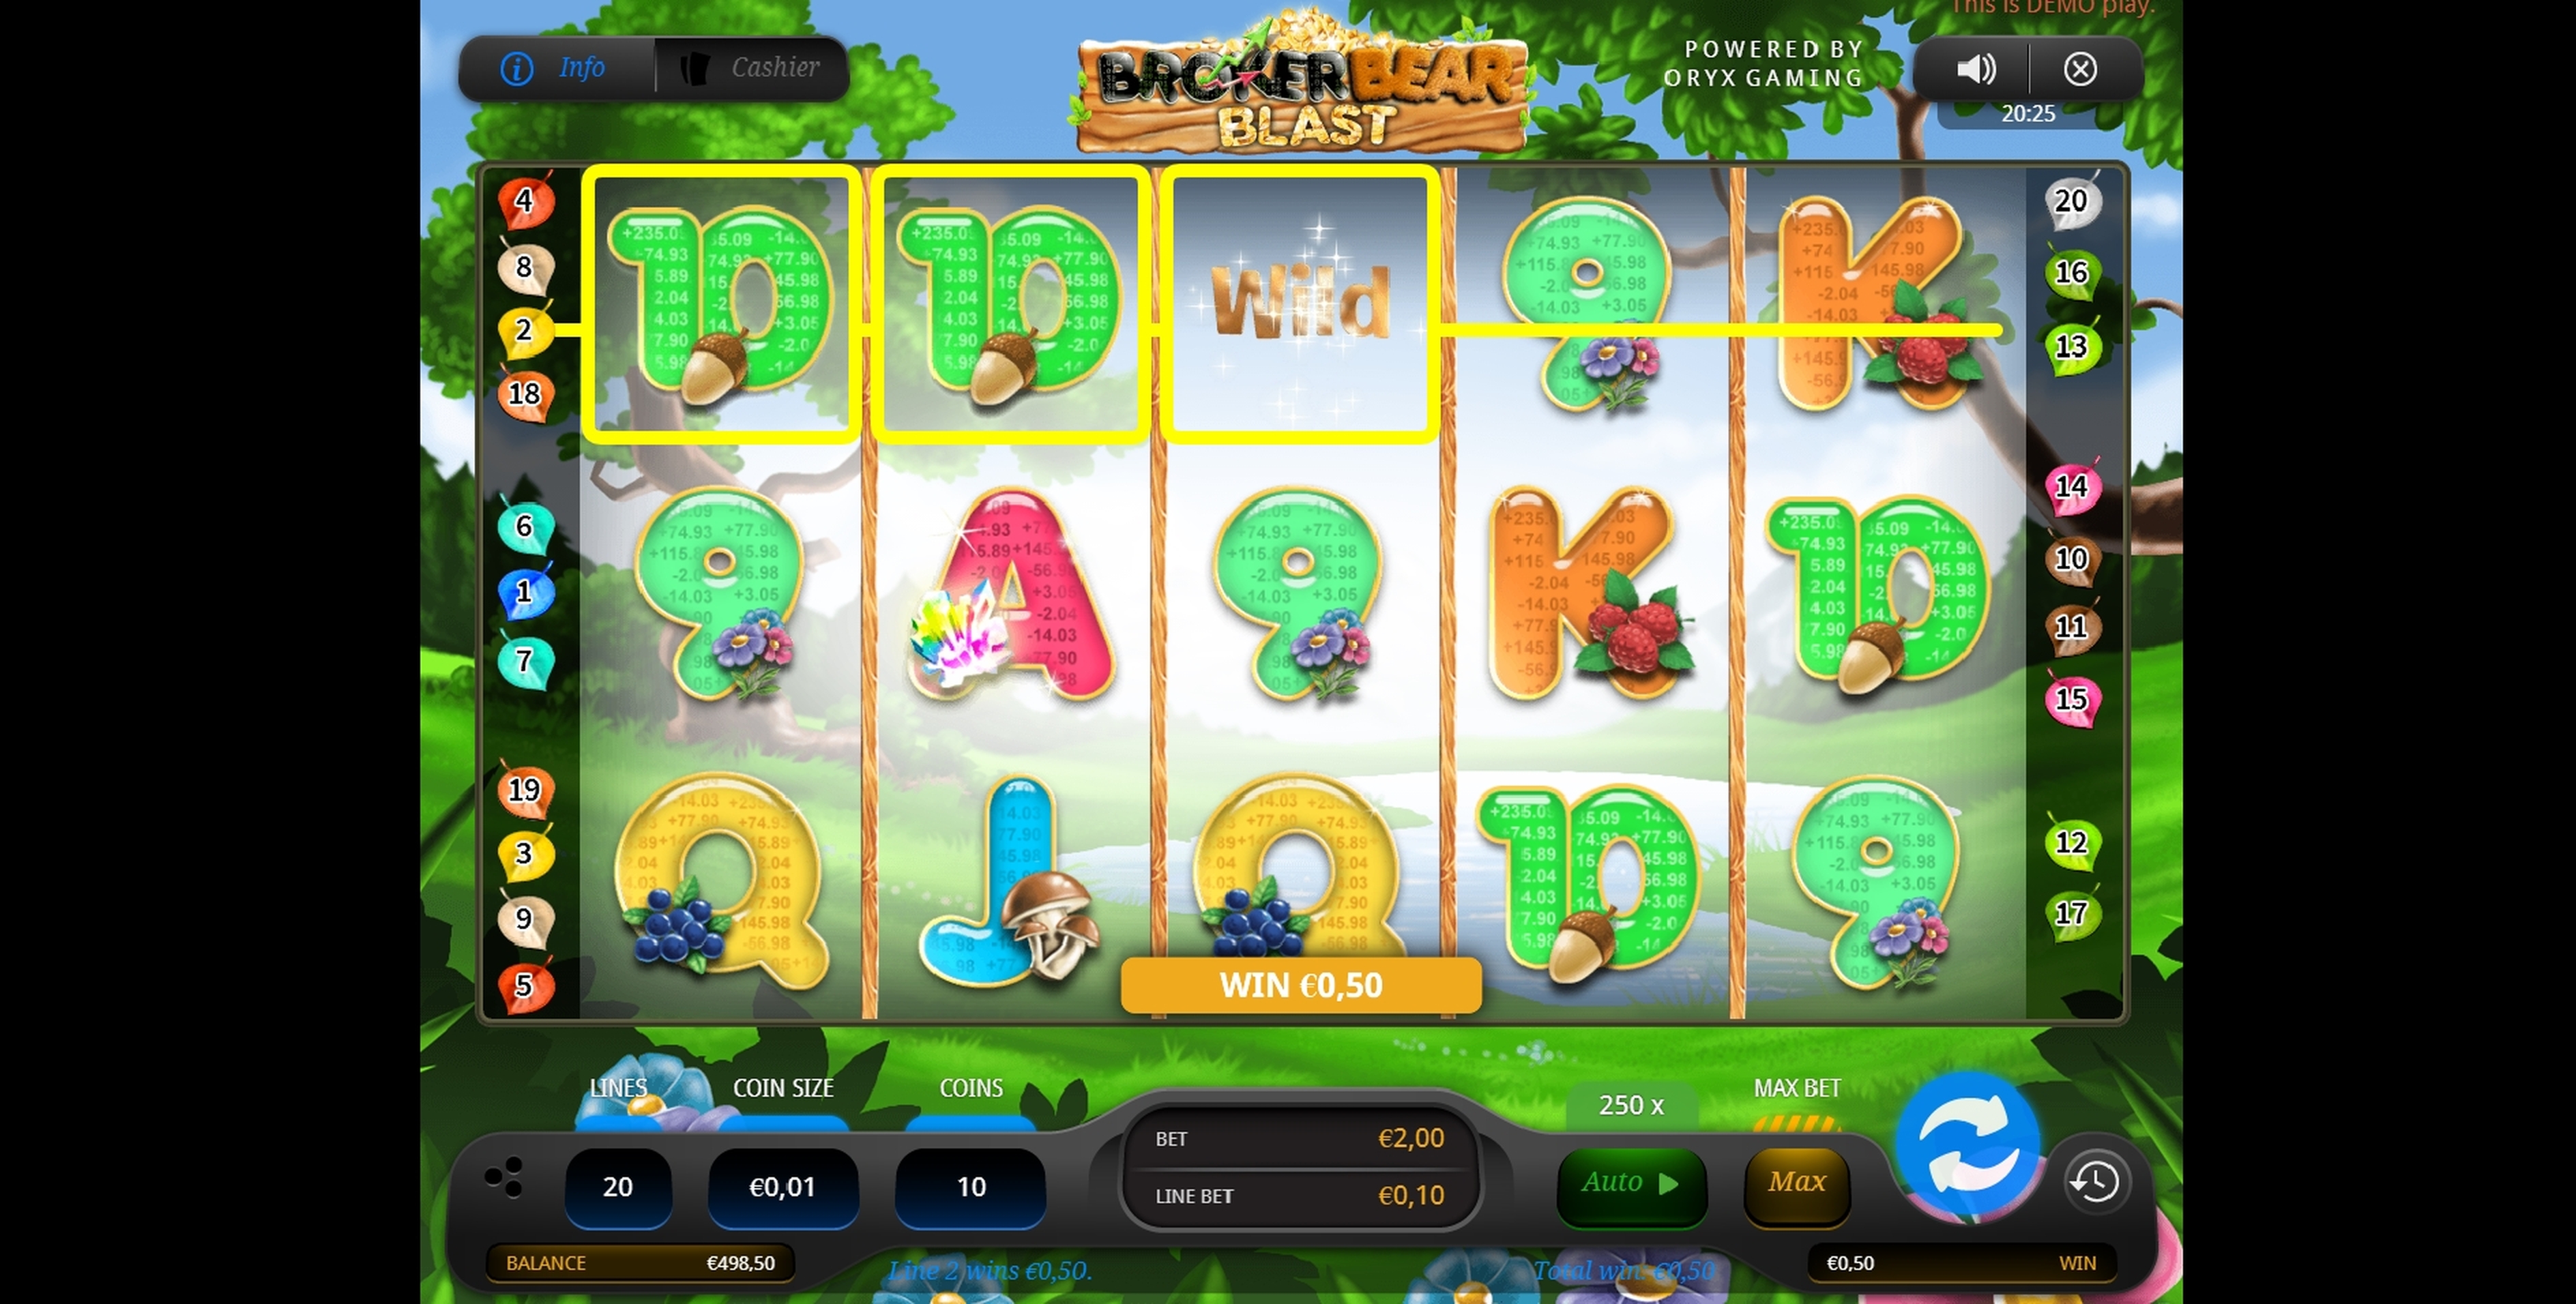 Win Money in Broker Bear Blast Free Slot Game by Oryx Gaming